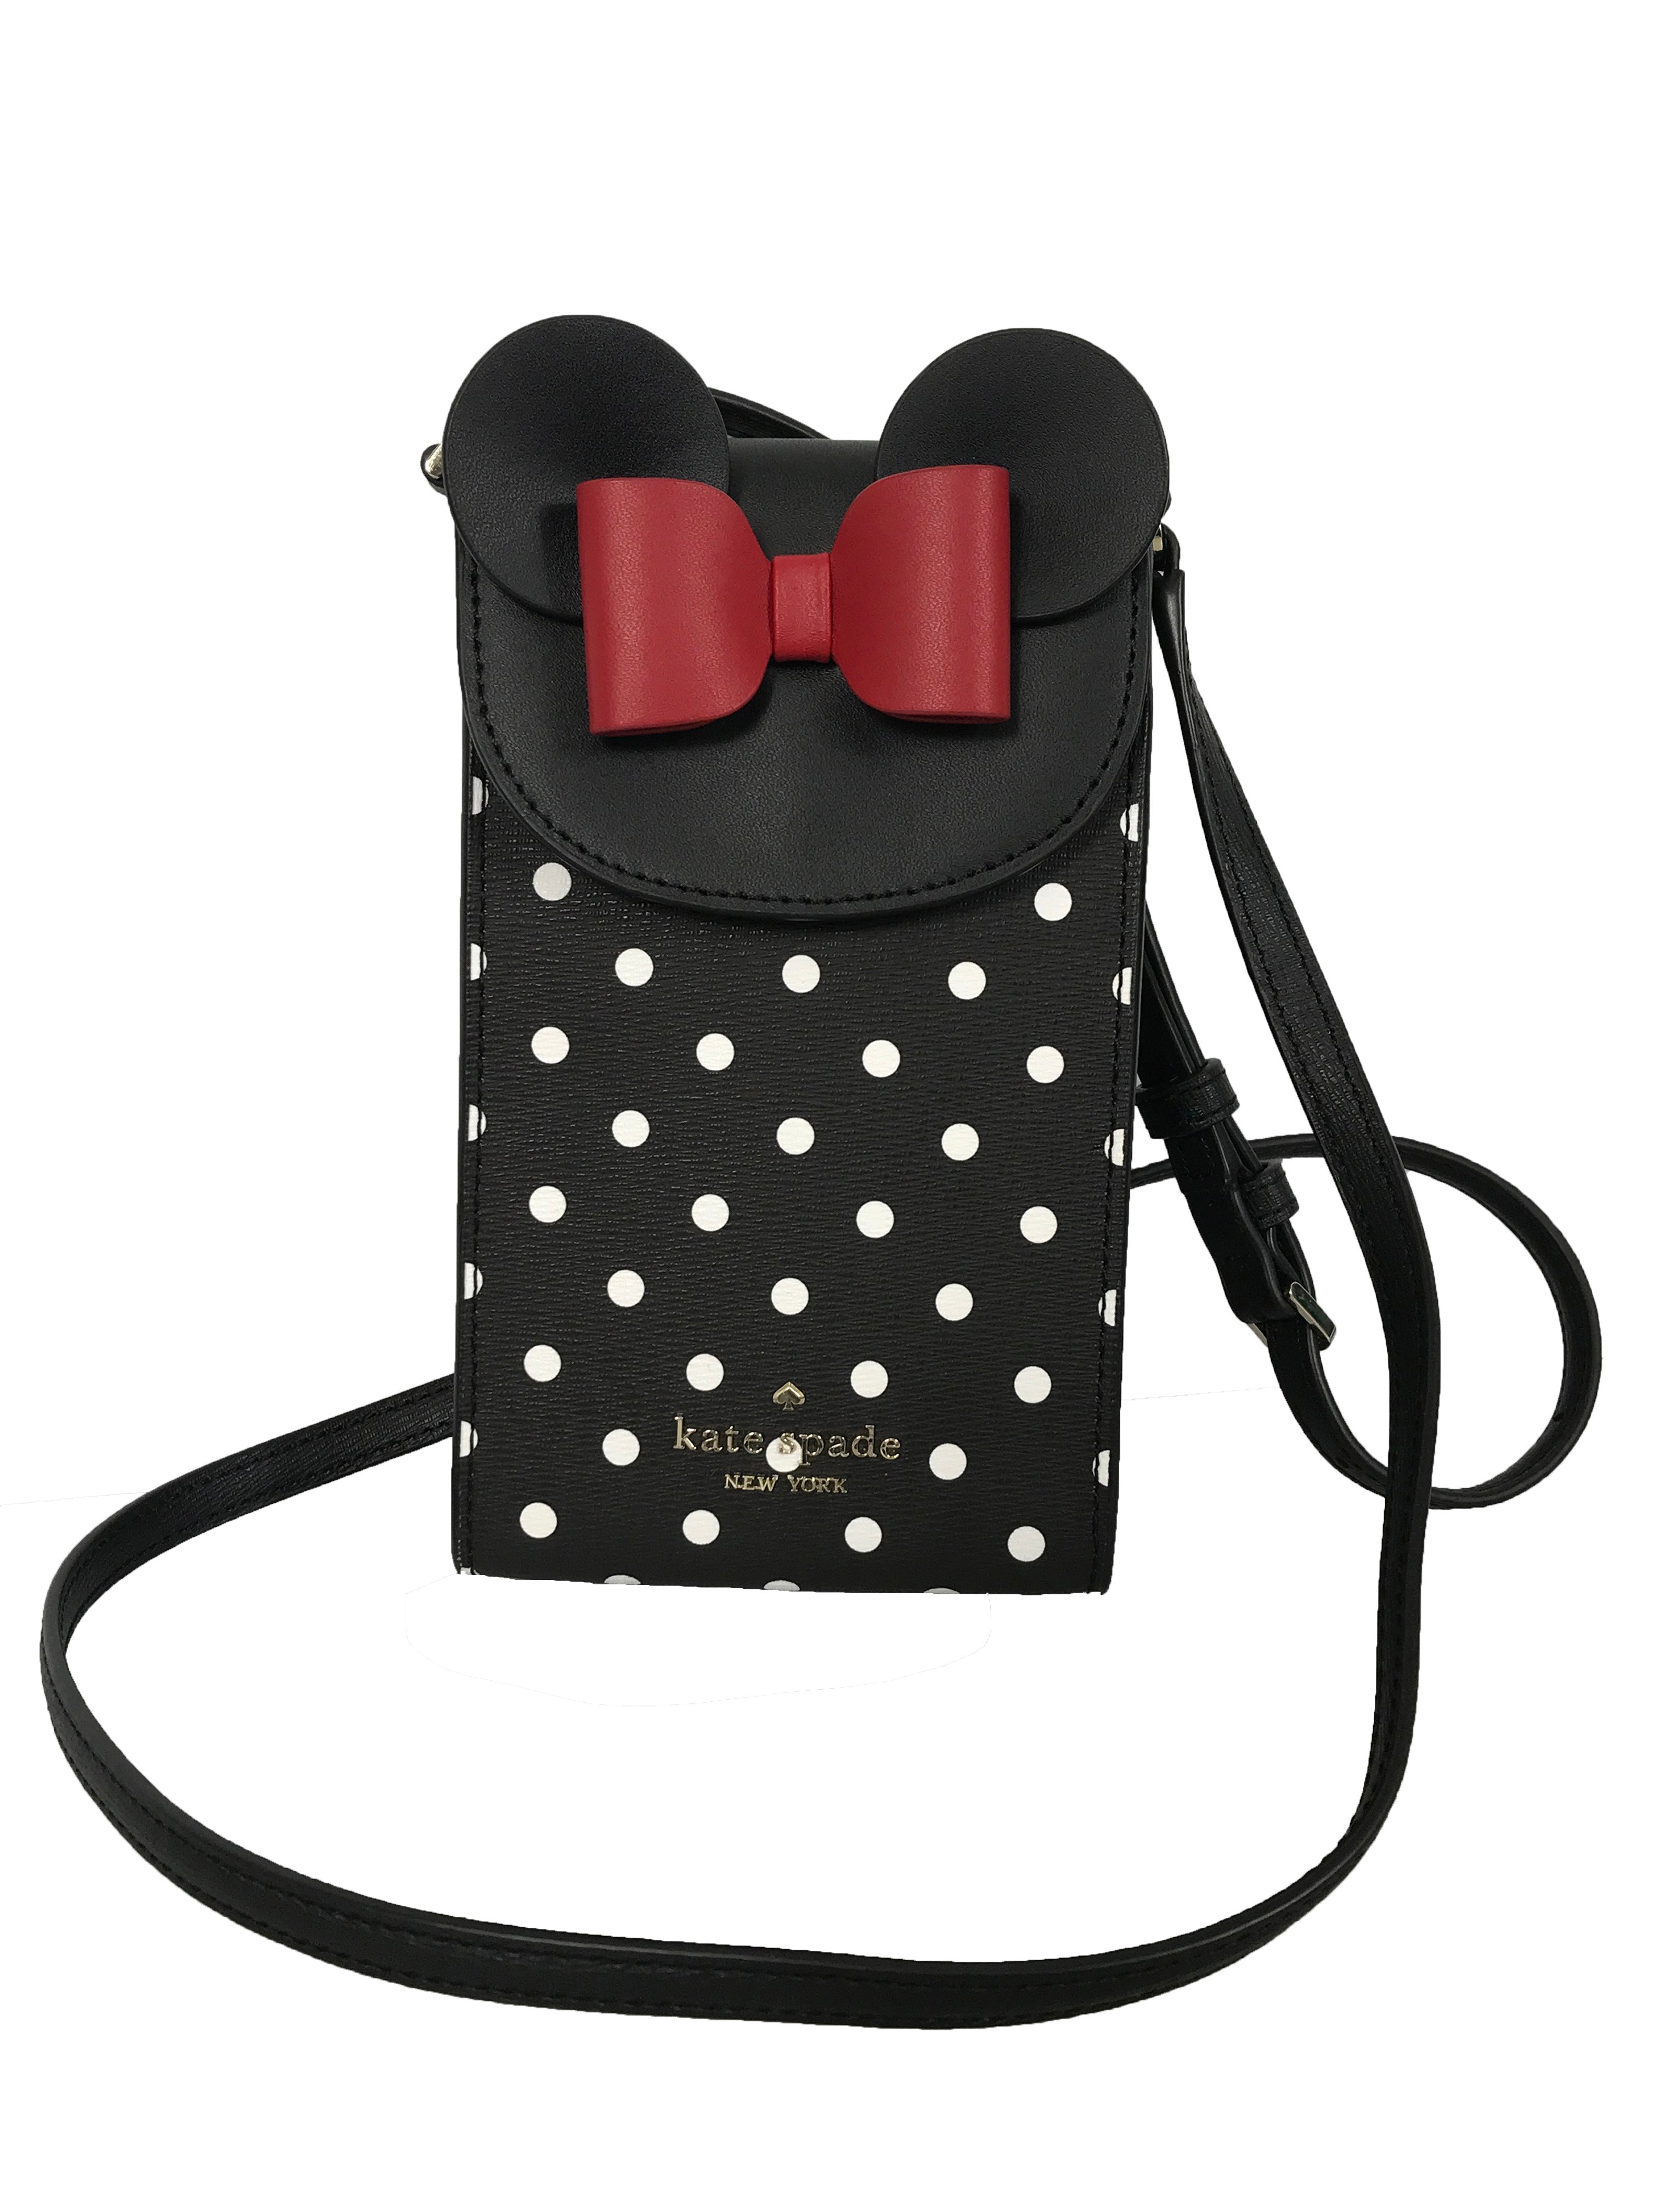 Kate Spade x Disney Minnie Mouse Crossbody Purse – MSU Surplus Store